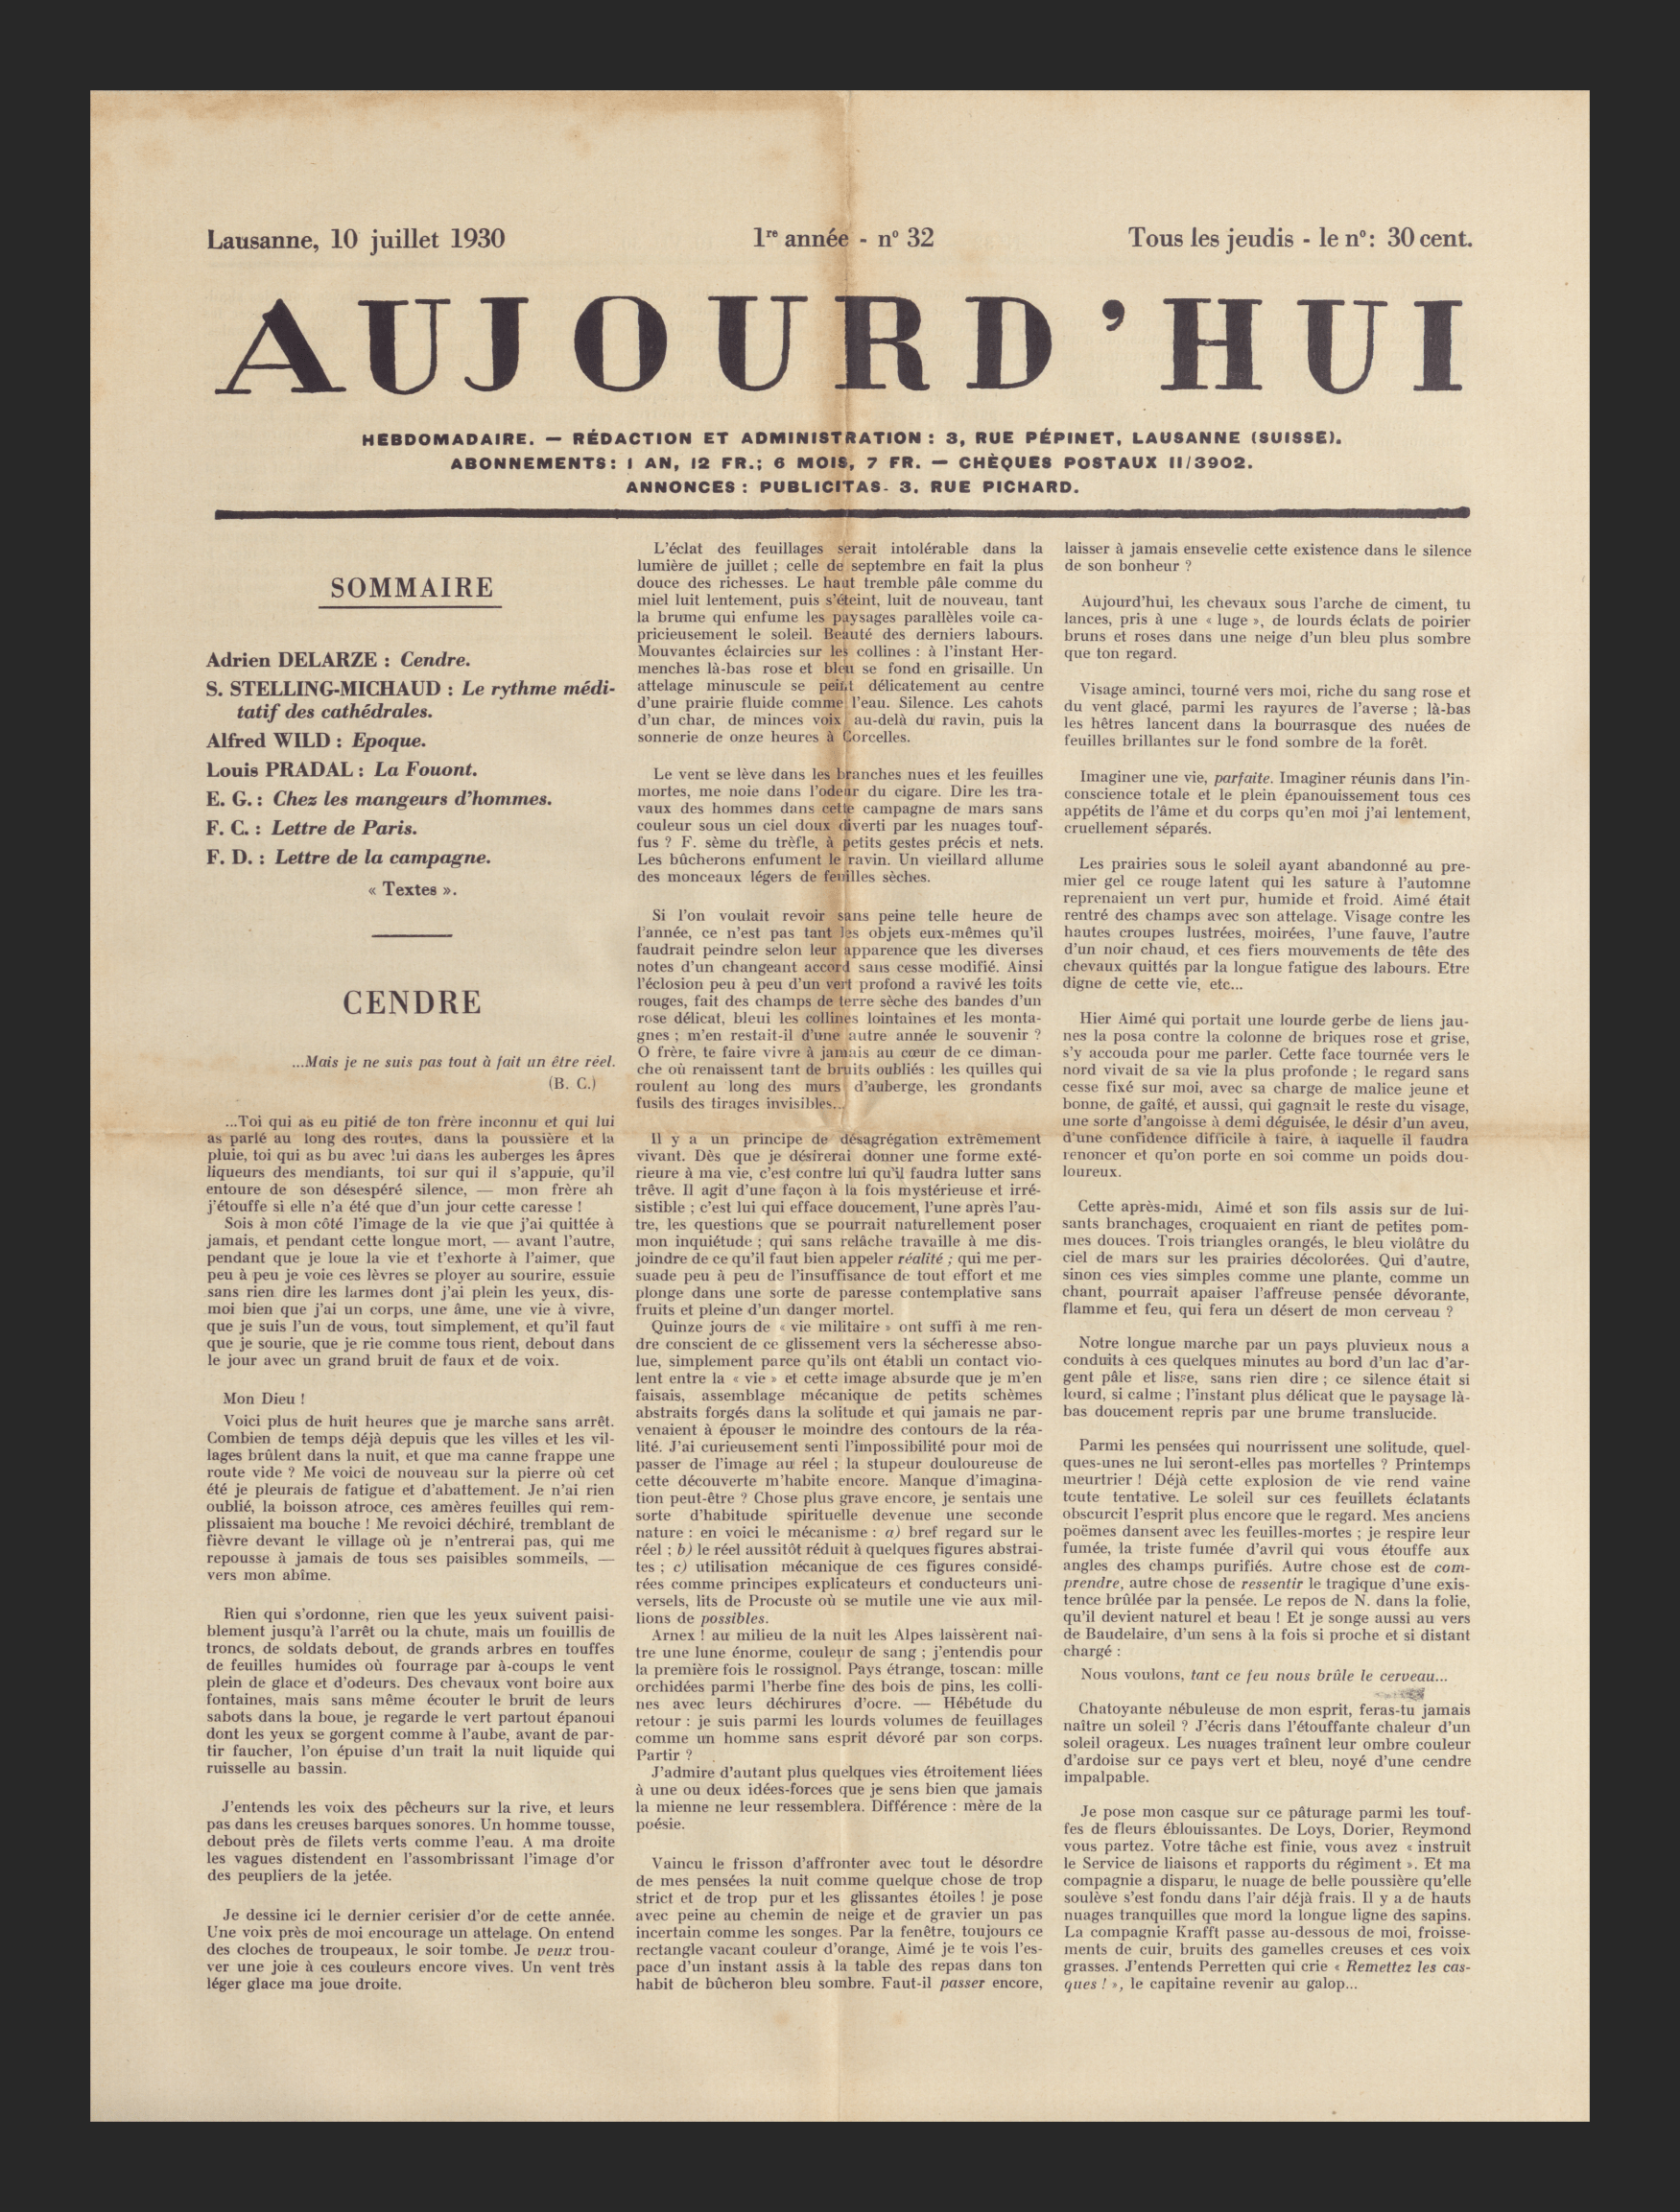 Digital facsimile of "Cendre", Aujourd'hui n°32, 10 July 1930.